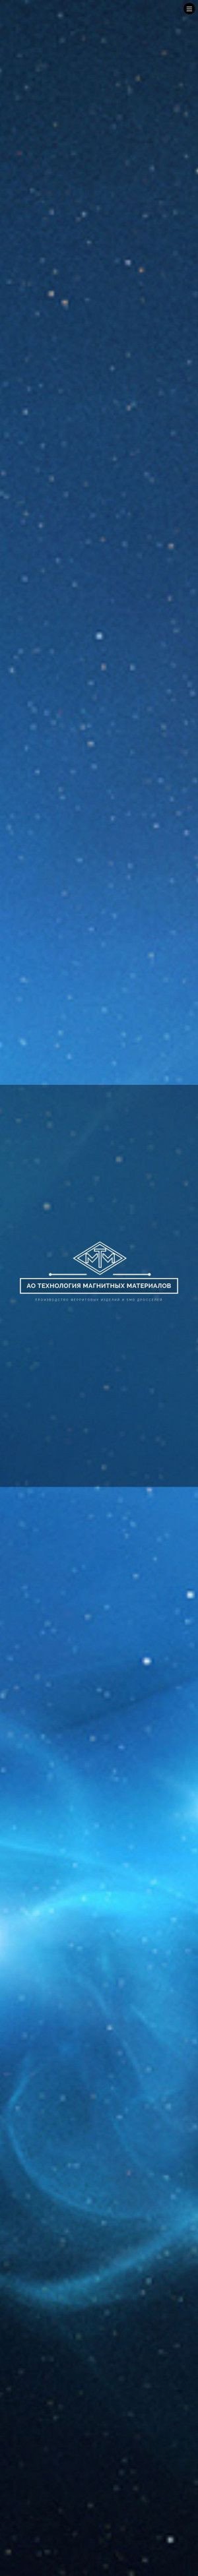 Предпросмотр для tmm-ferrite.ru — Технология магнитных материалов